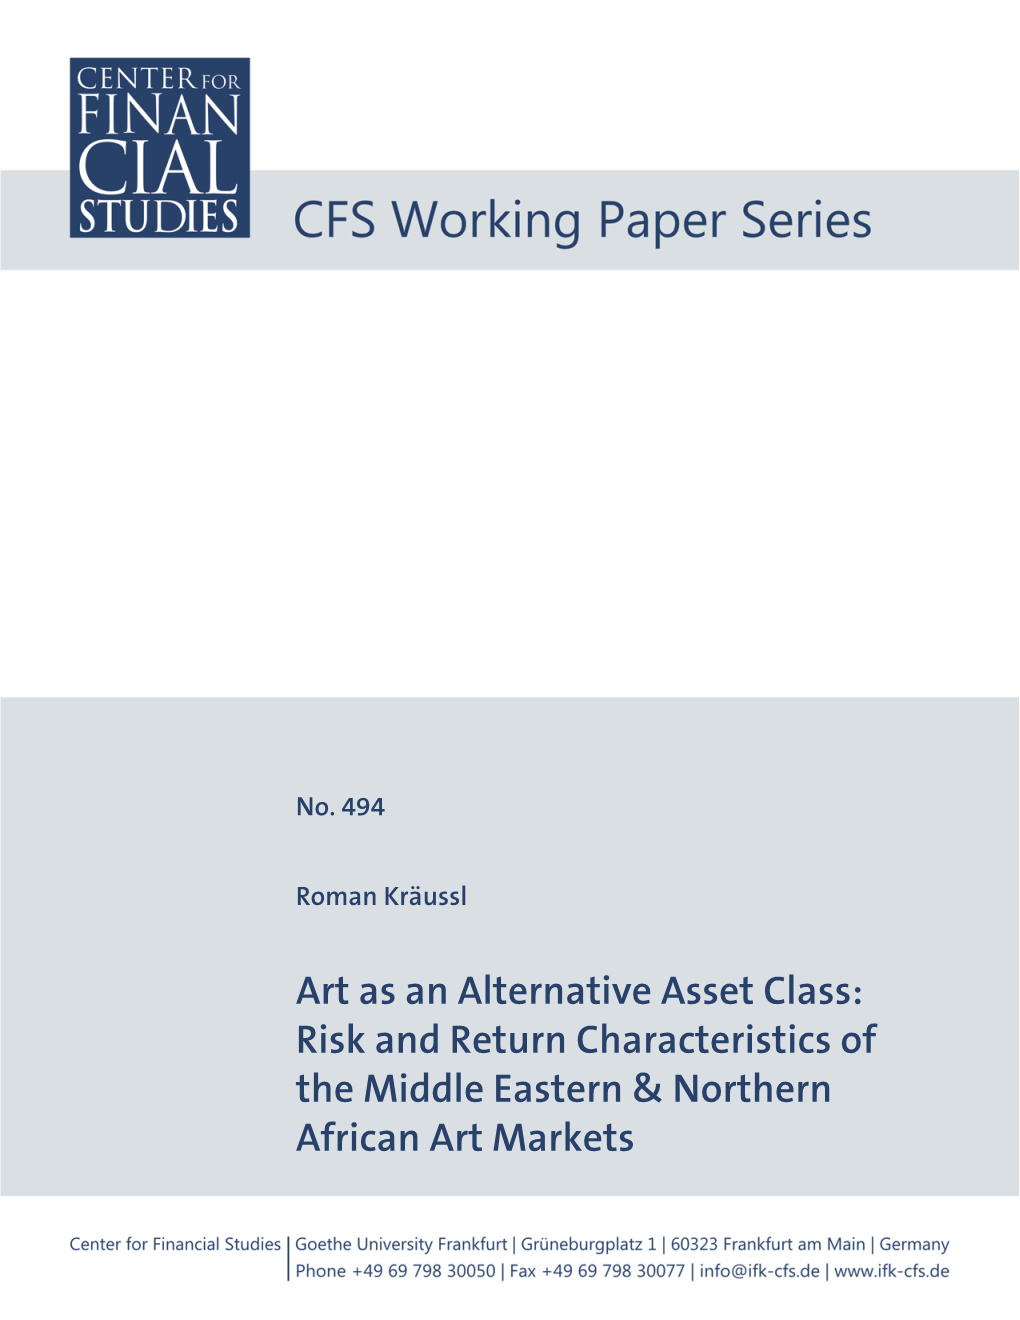 Art As an Alternative Asset Class: Risk and Return Characteristics of the Middle Eastern & Northern African Art Markets